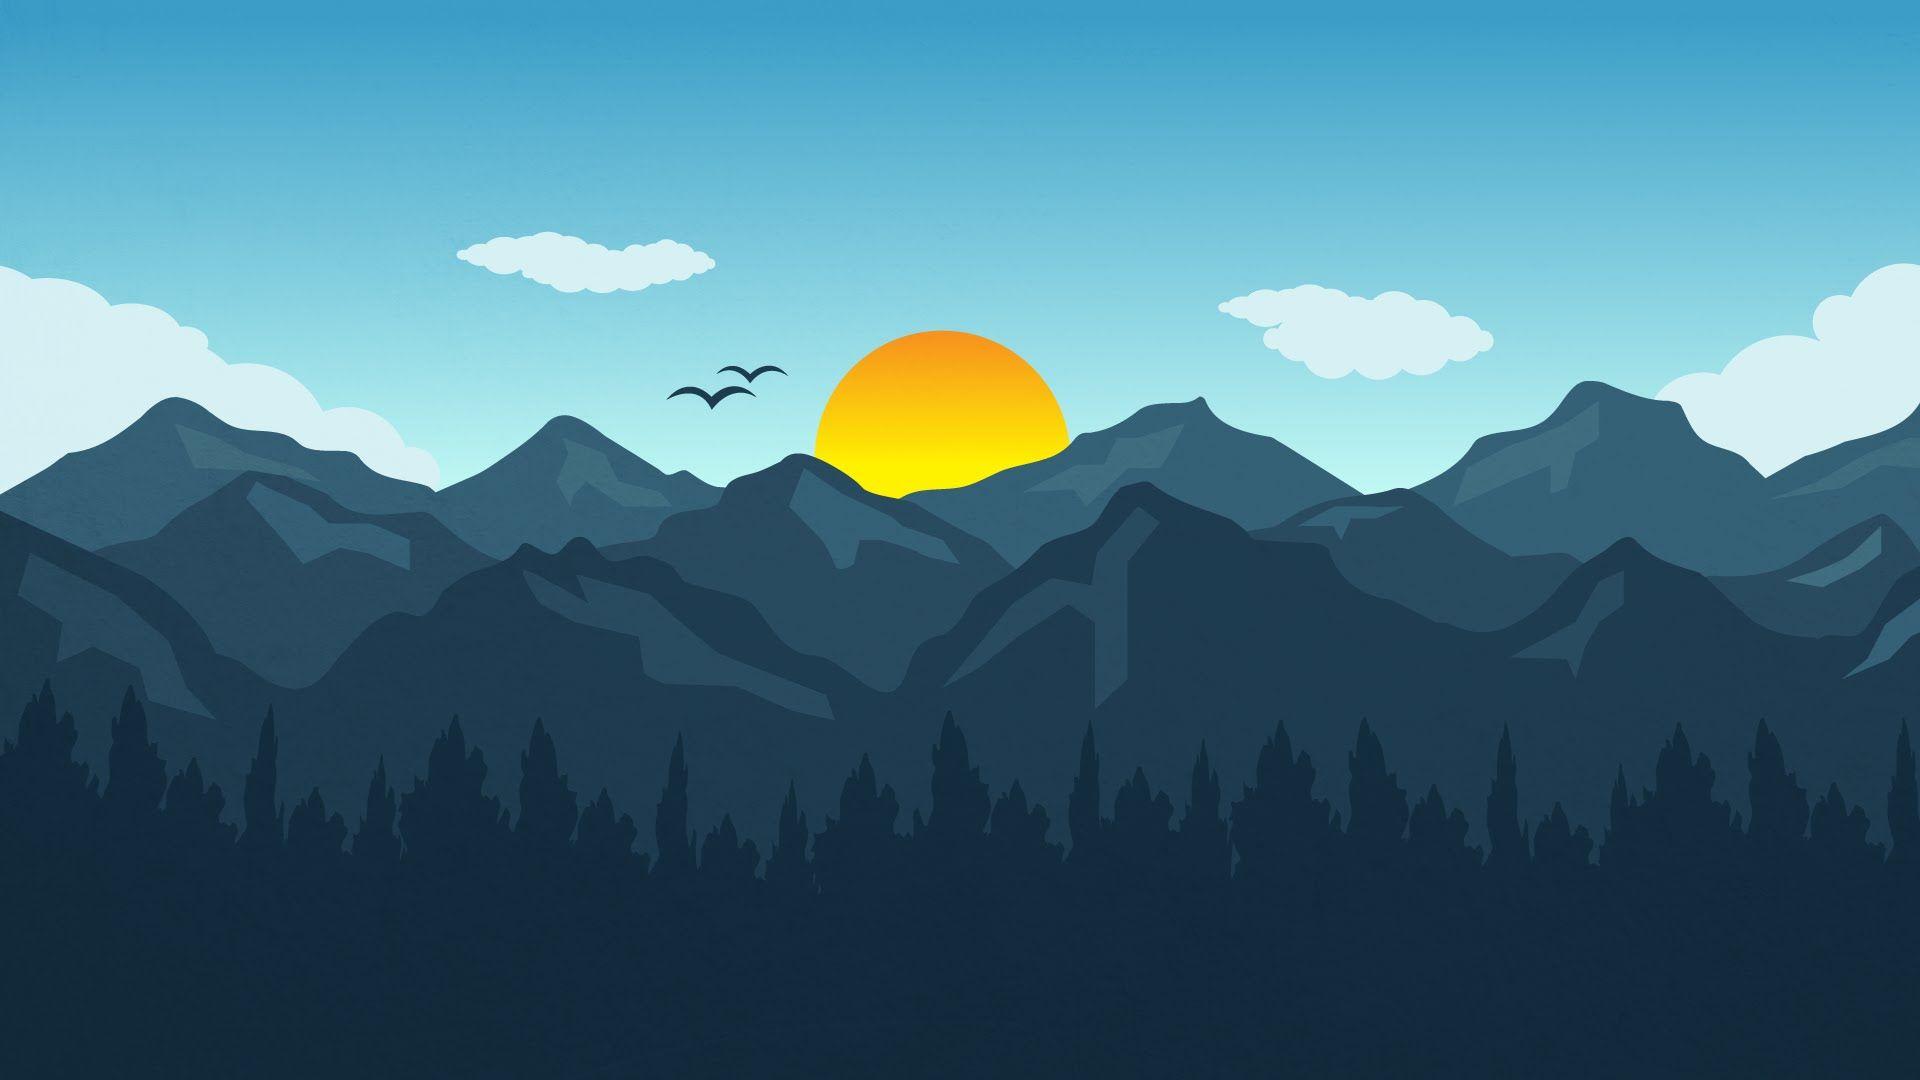 Adobe Illustrator CC Tutorial to design Flat landscape